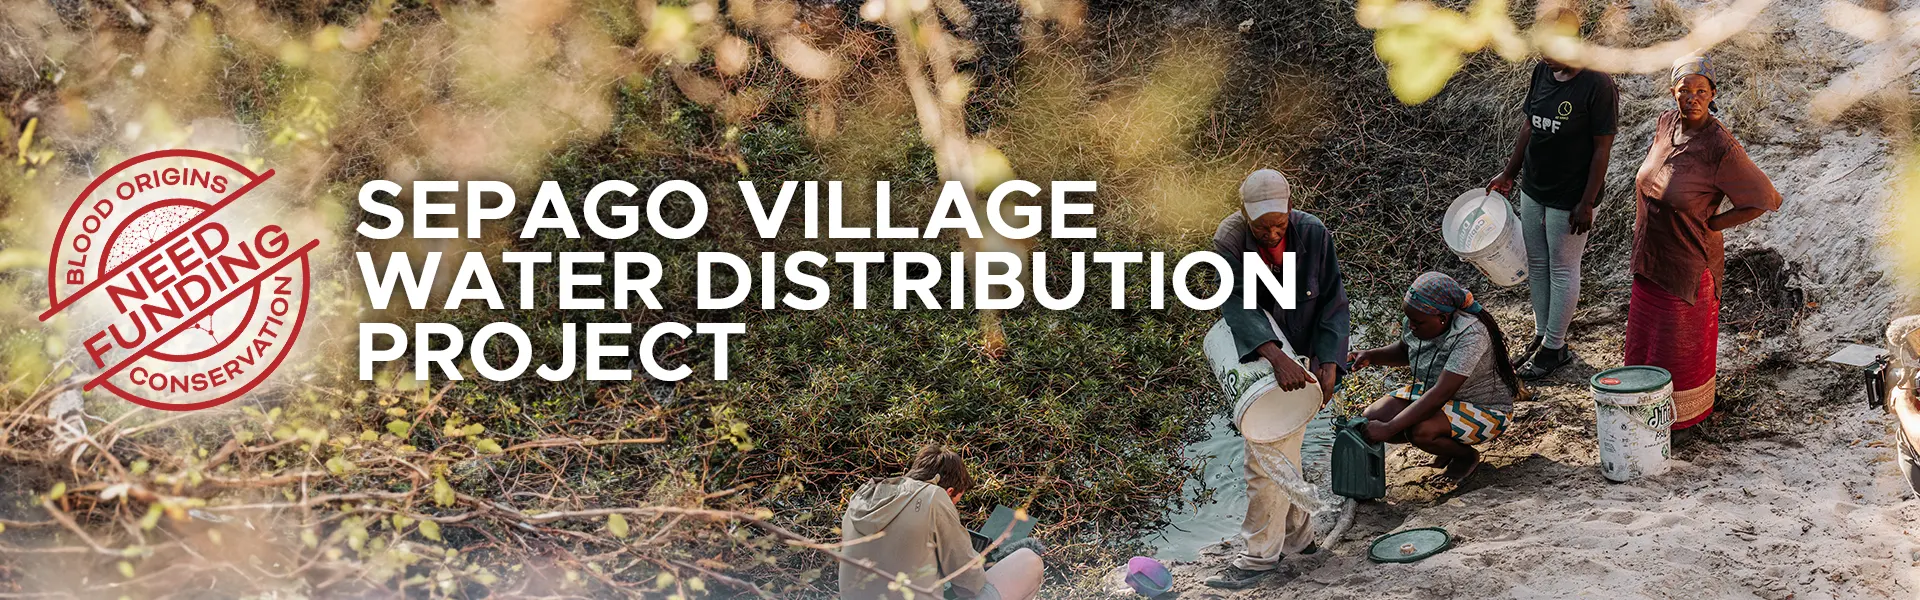 Sepago Village Water Distribution Project desktop